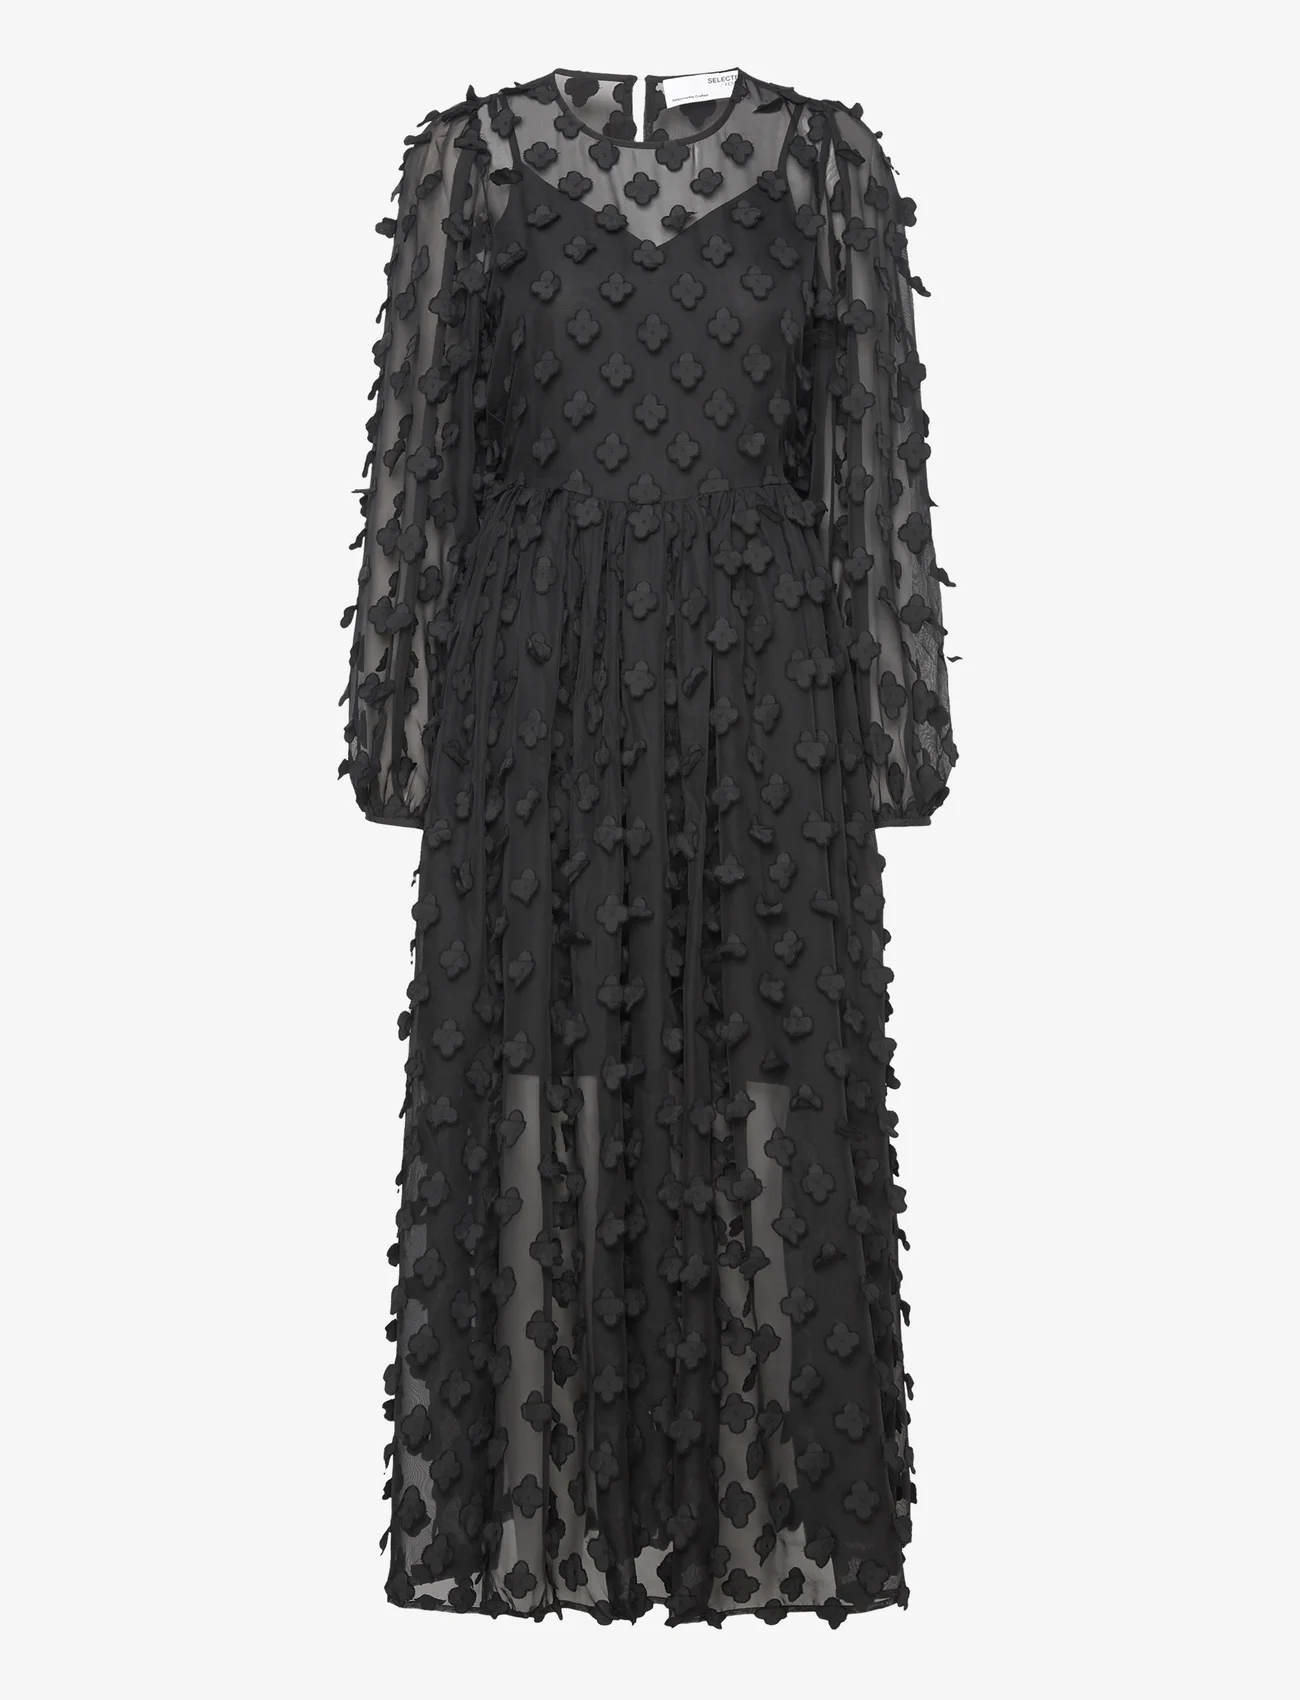 Selected Femme - SLFKYSHA LS ANKLE DRESS B - festmode zu outlet-preisen - black - 0